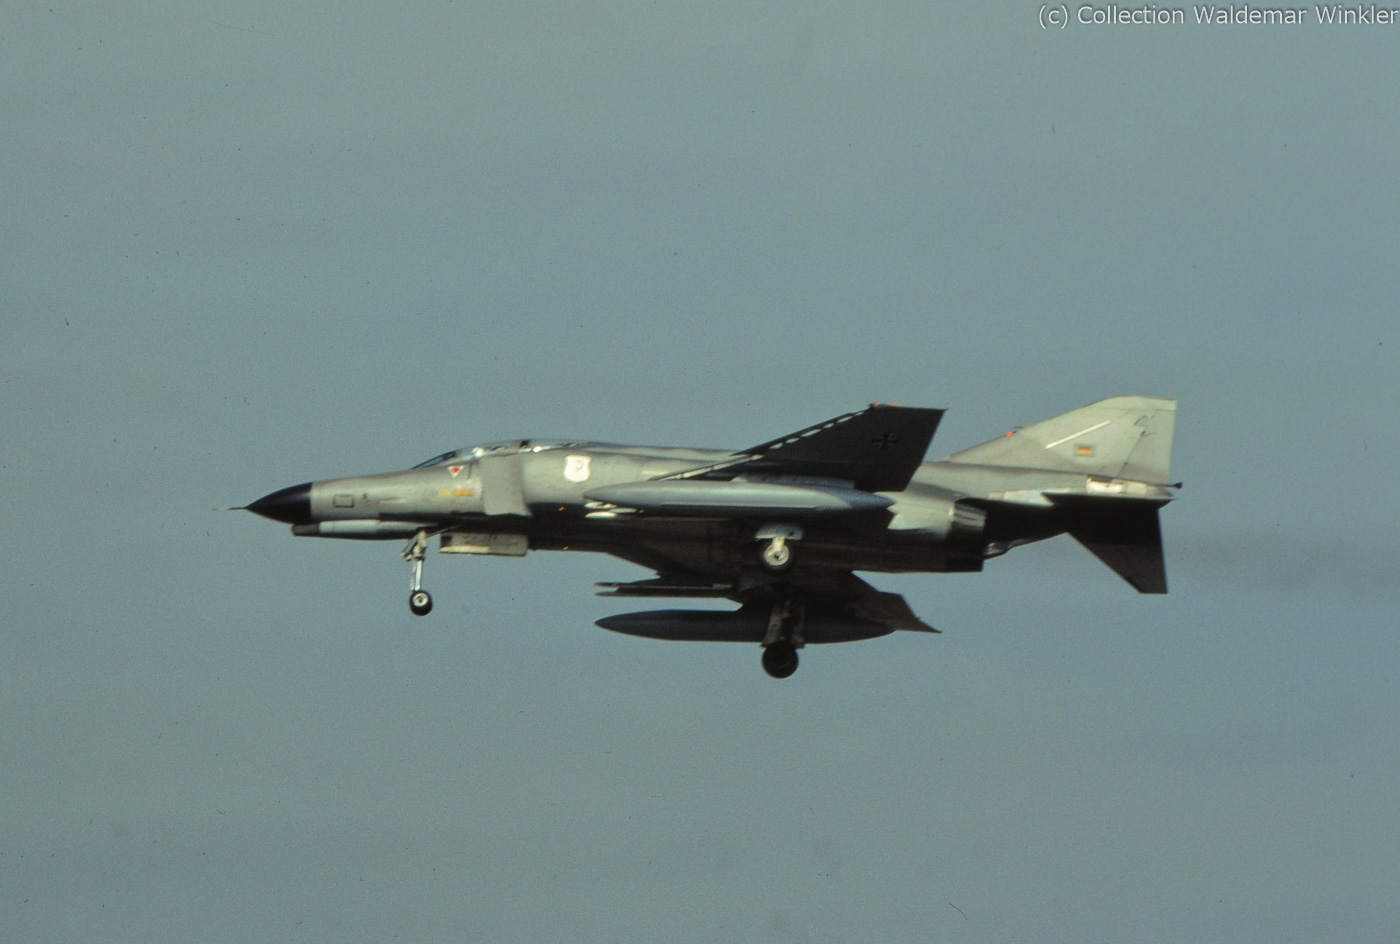 F-4_Phantom_II_DSC_1387.jpg